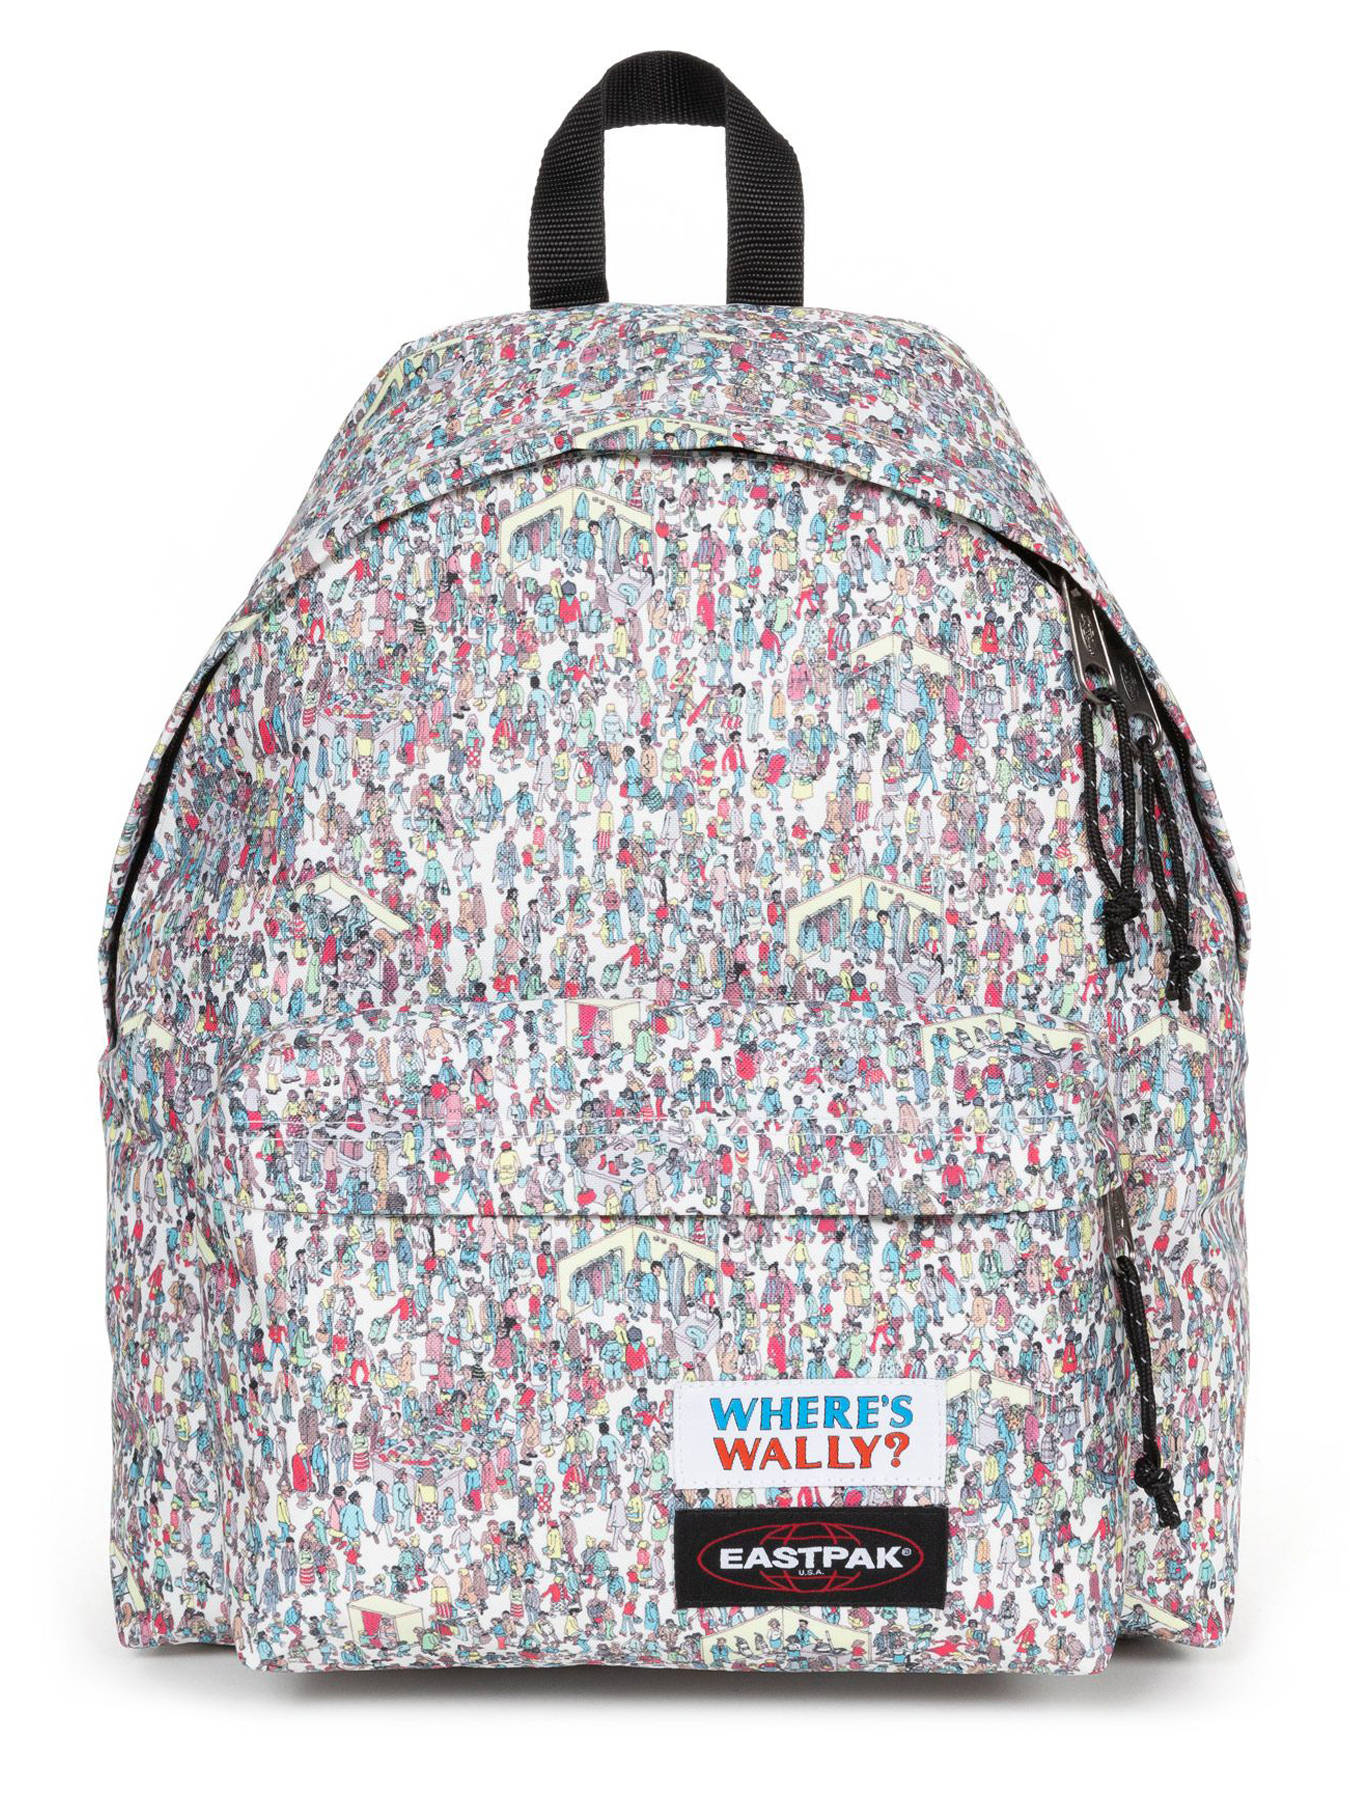 Eastpak Authentic Orbit Backpack | Backpacks, Backpack outfit, Eastpak  backpack